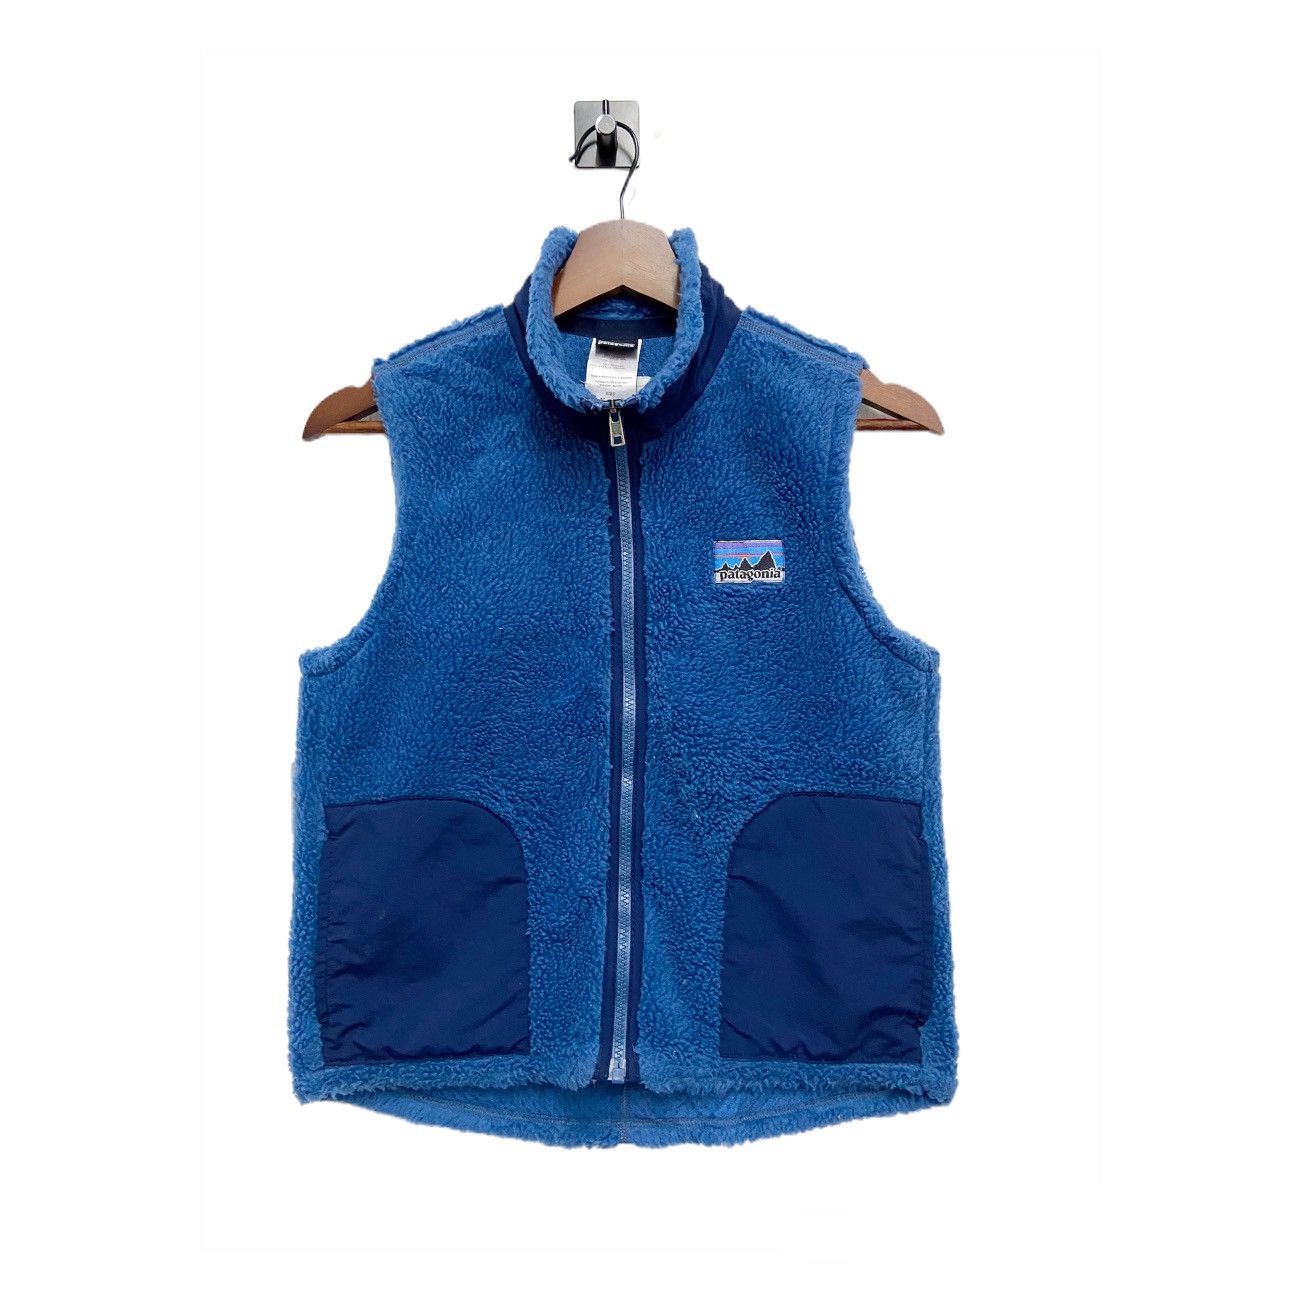 Patagonia Fleece Vest Jacket - 1